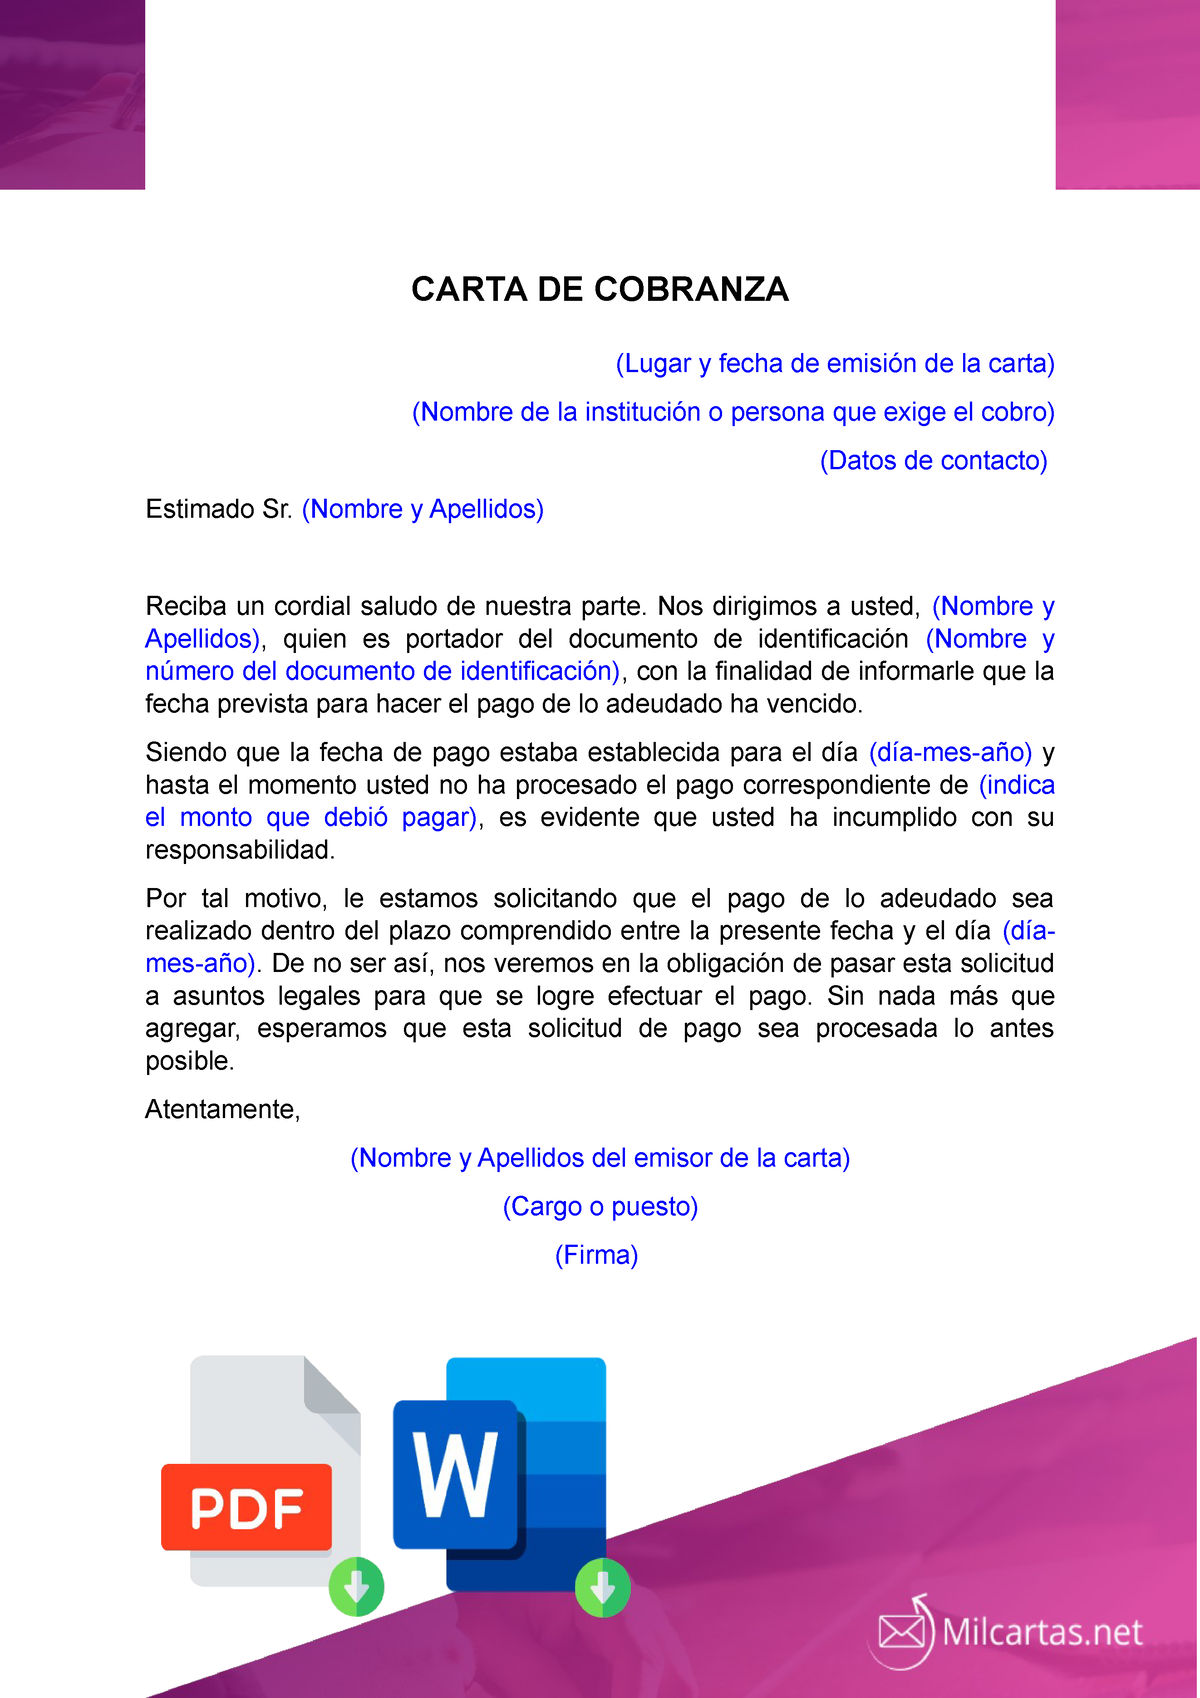 Carta-de-cobranza - Modelo de carta de cobranza - CARTA DE COBRANZA CARTA  DE COBRANZA (Lugar y fecha - Studocu